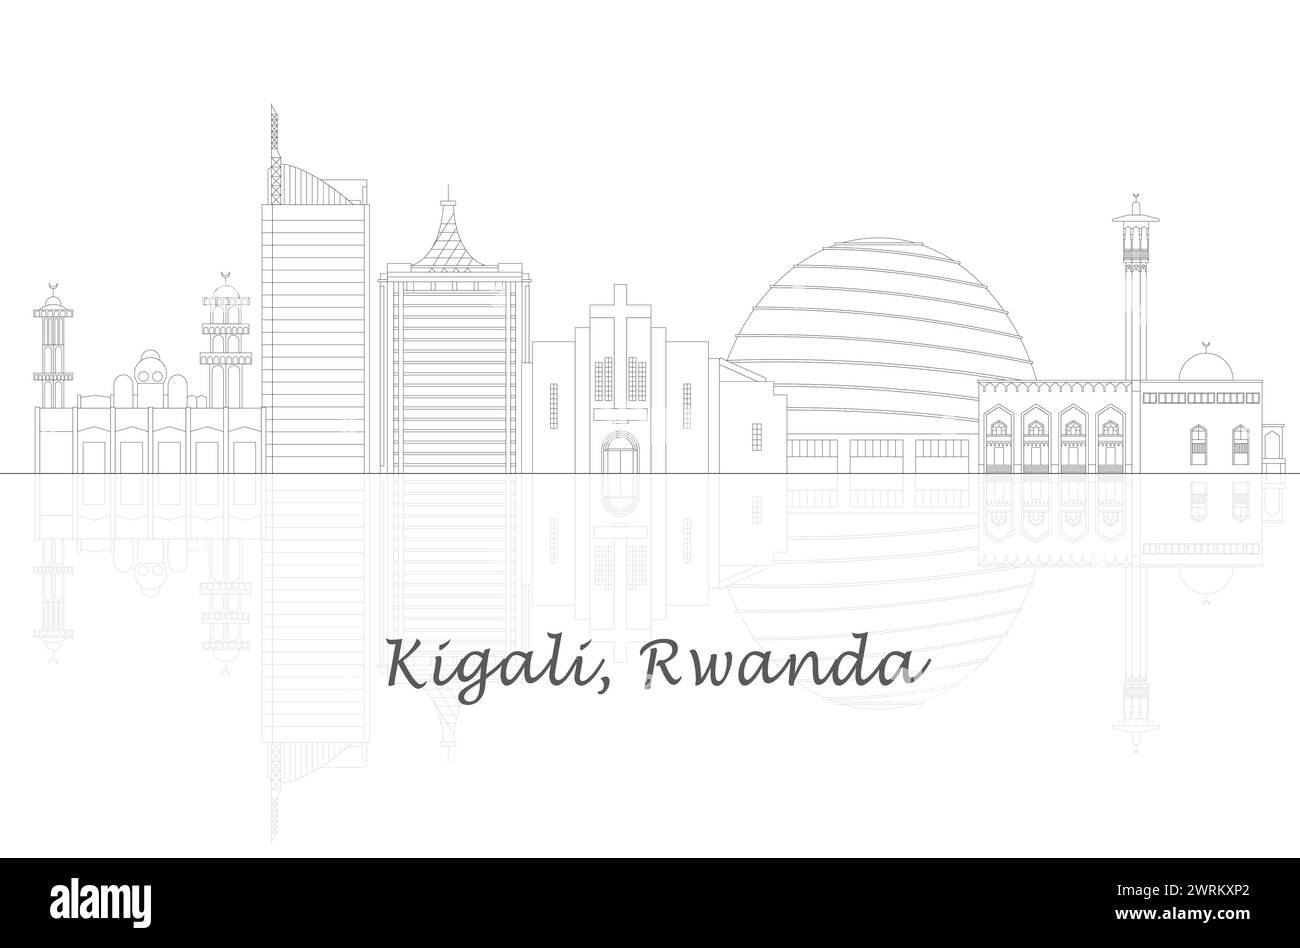 Aperçu Skyline panorama de la ville de Kigali, Rwanda - illustration vectorielle Illustration de Vecteur